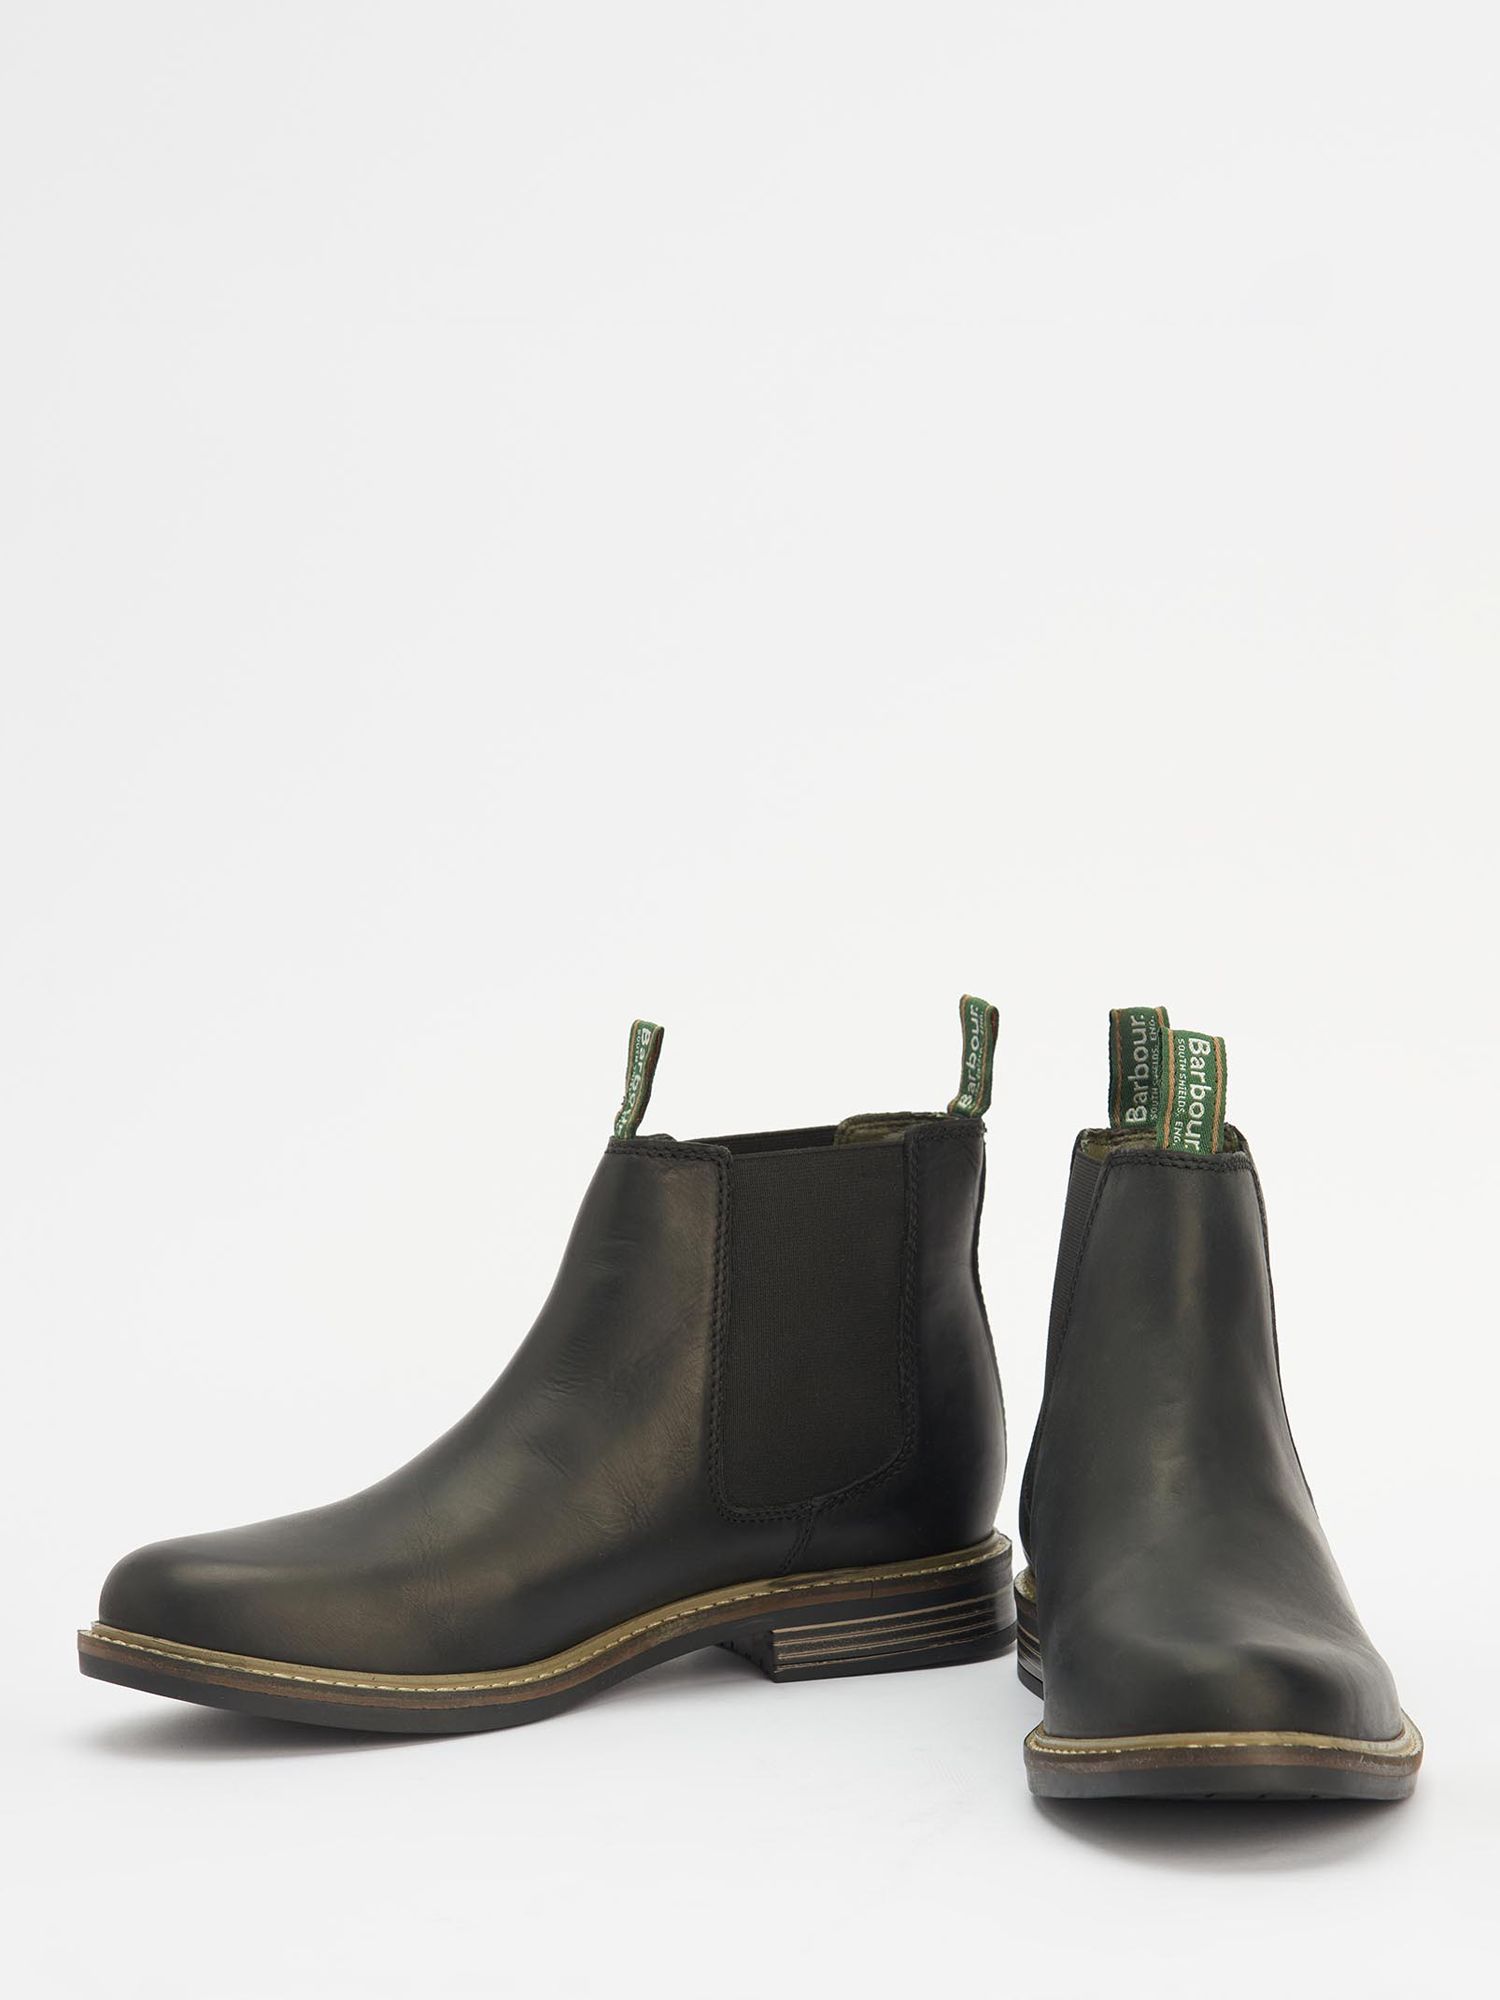 Barbour Farsley Slip On Boots, Black, 7